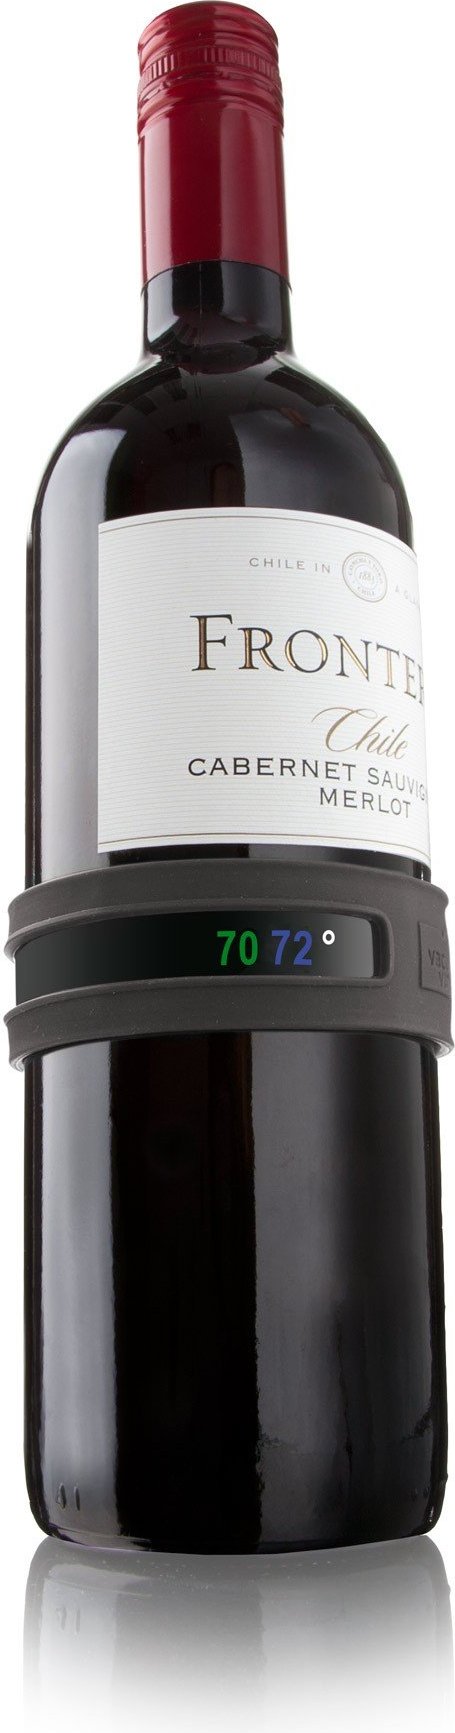 Snap Wine bottle thermometer - Vacu Vin 3630860